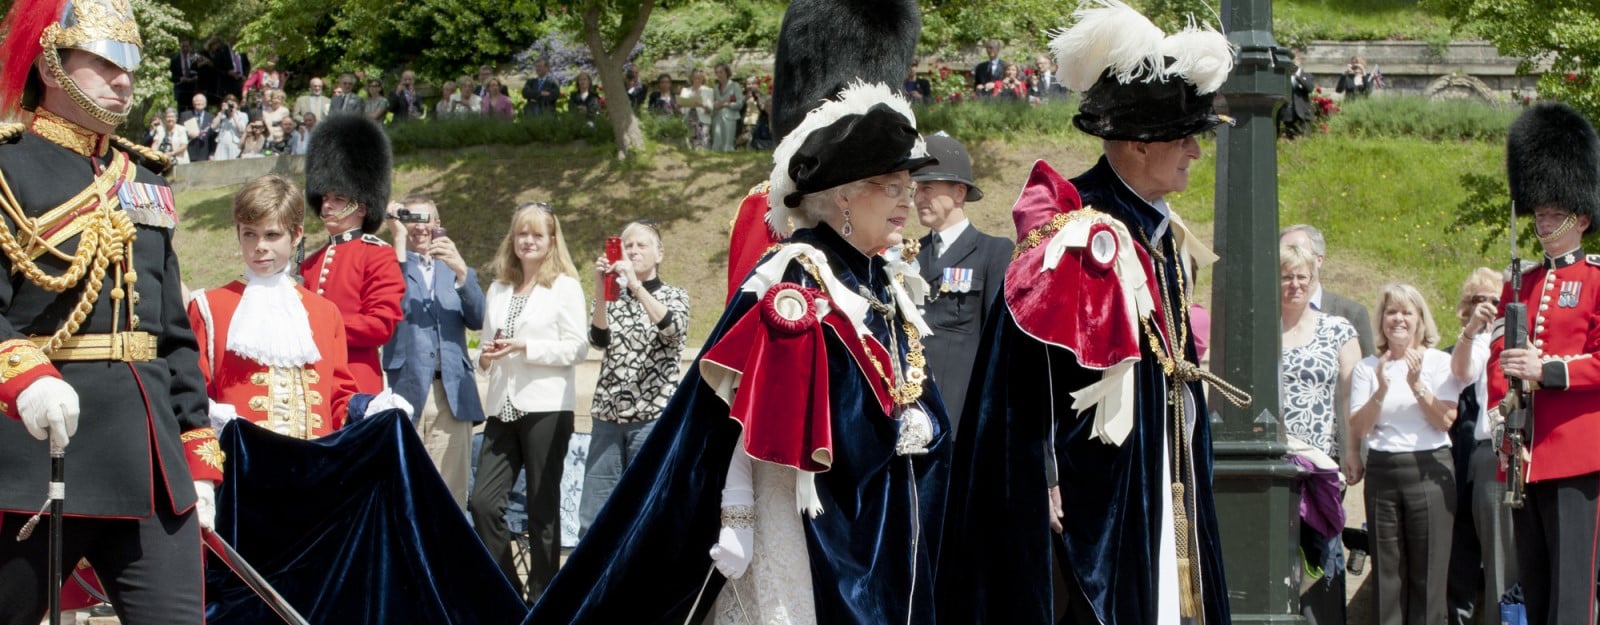 Queen Elizabeth II on Garter Day at Windsor Castle